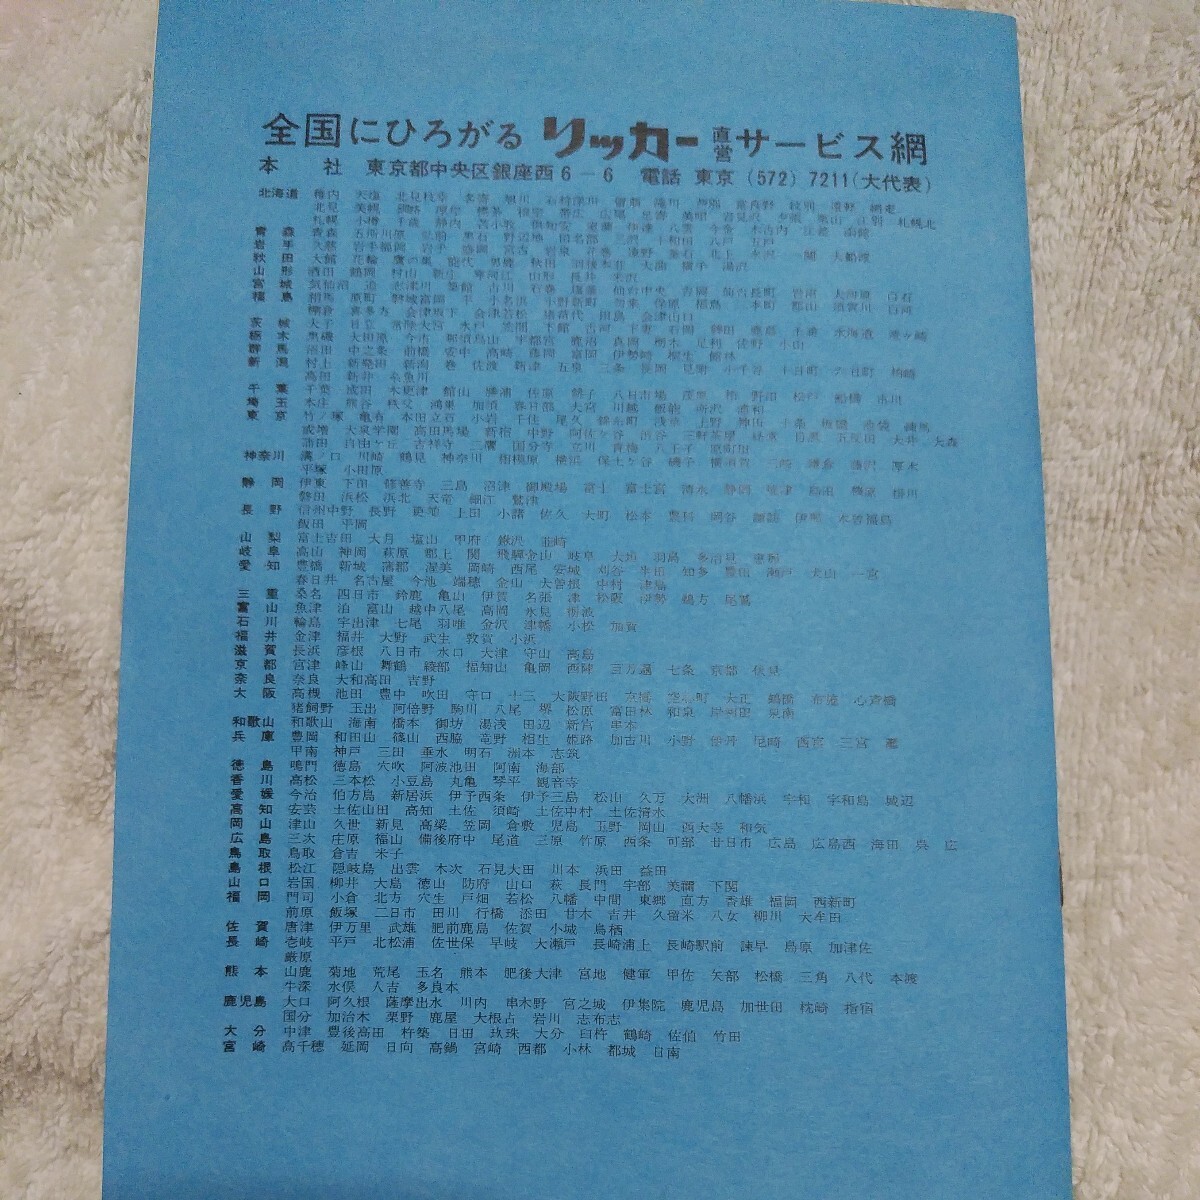  Showa Retro li машина рефрижератор RS-110 использование инструкция цена . письменная гарантия комплект 